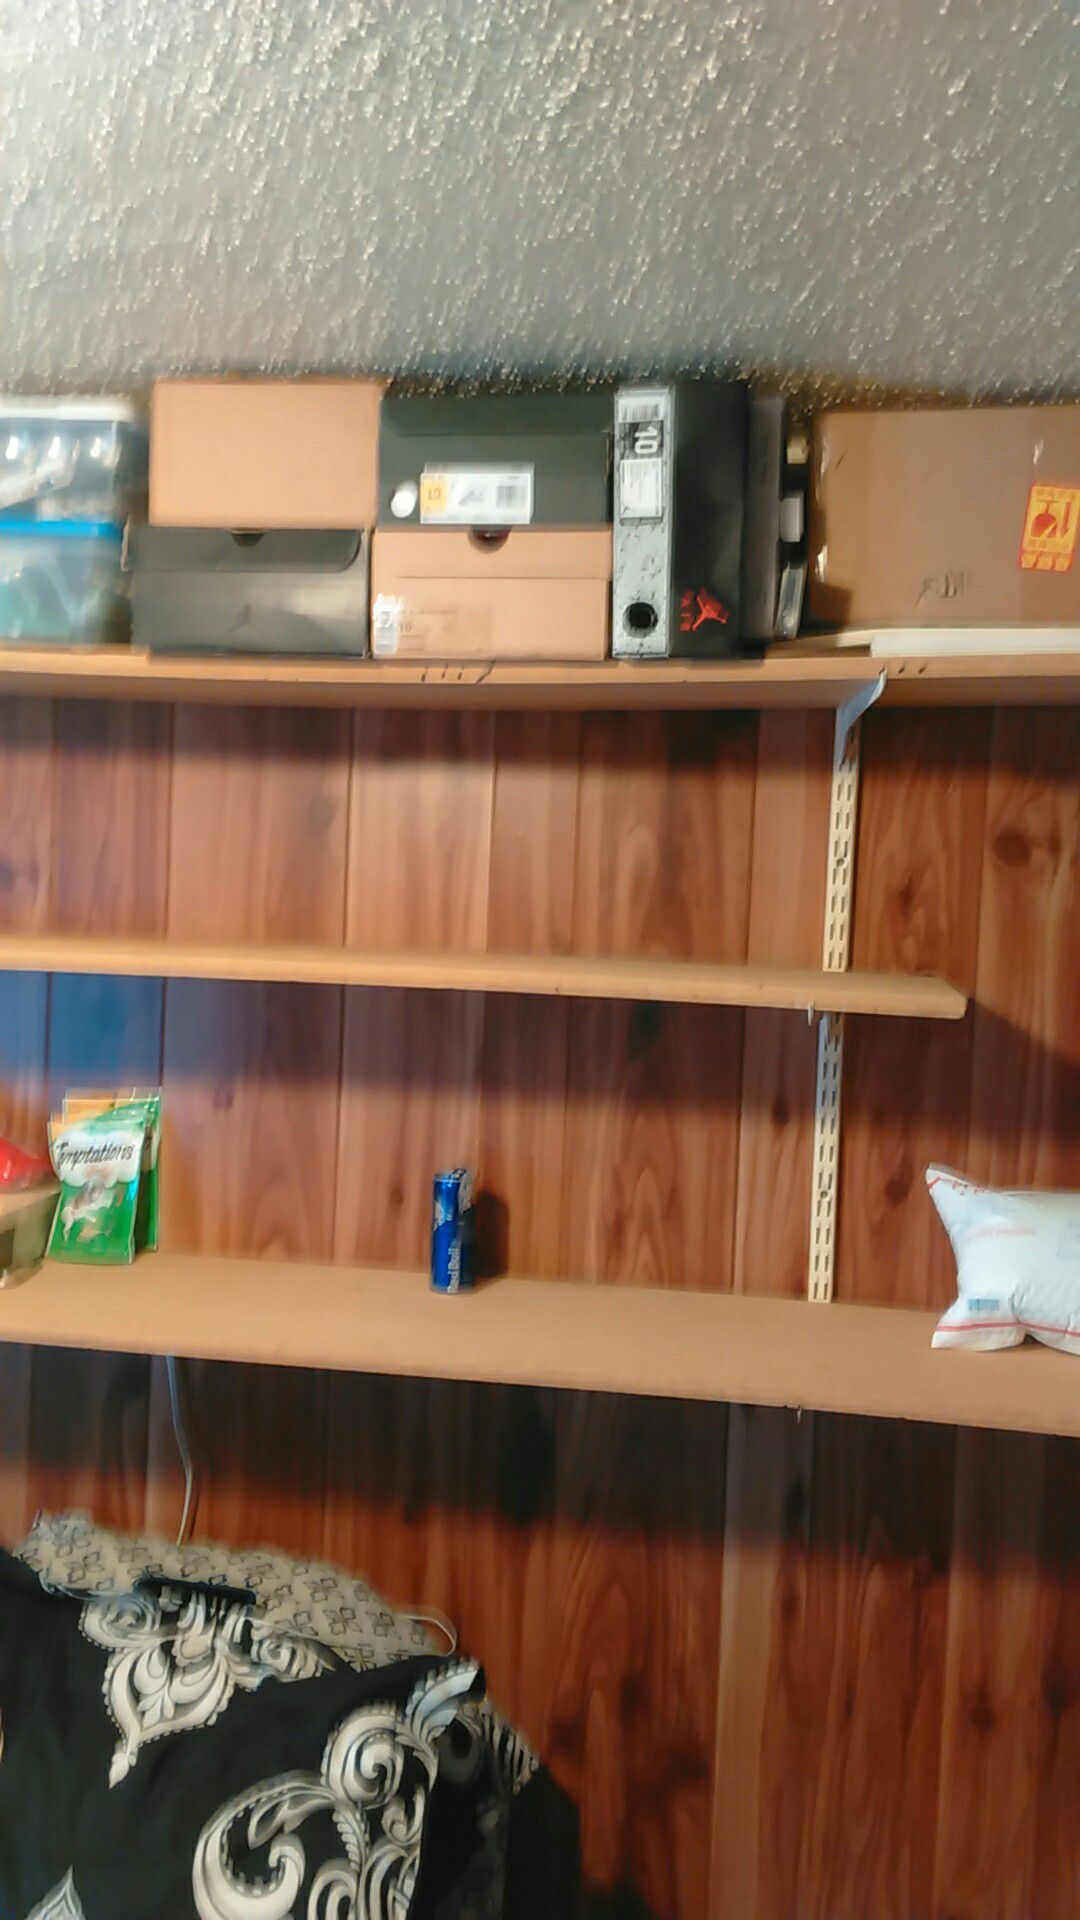 Shelving 8 ft with 3 shelves all metal hareware $20